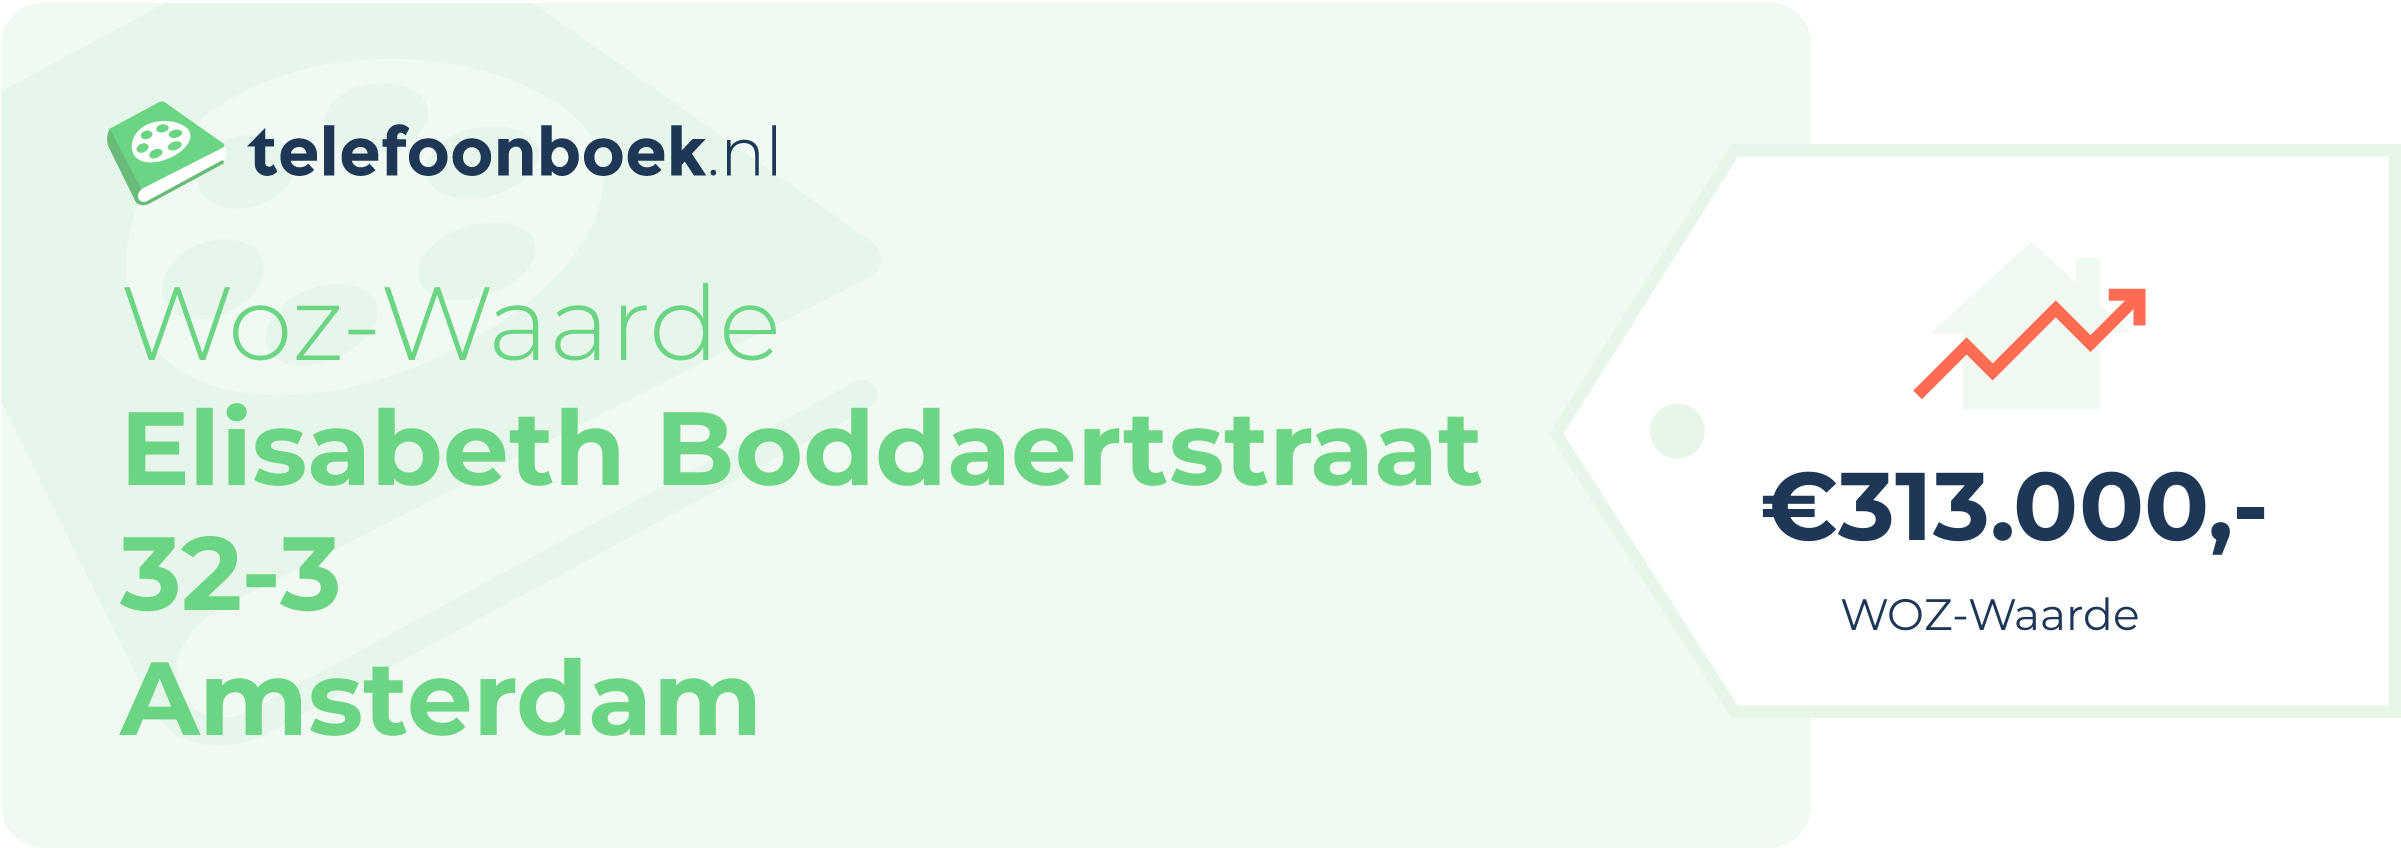 WOZ-waarde Elisabeth Boddaertstraat 32-3 Amsterdam